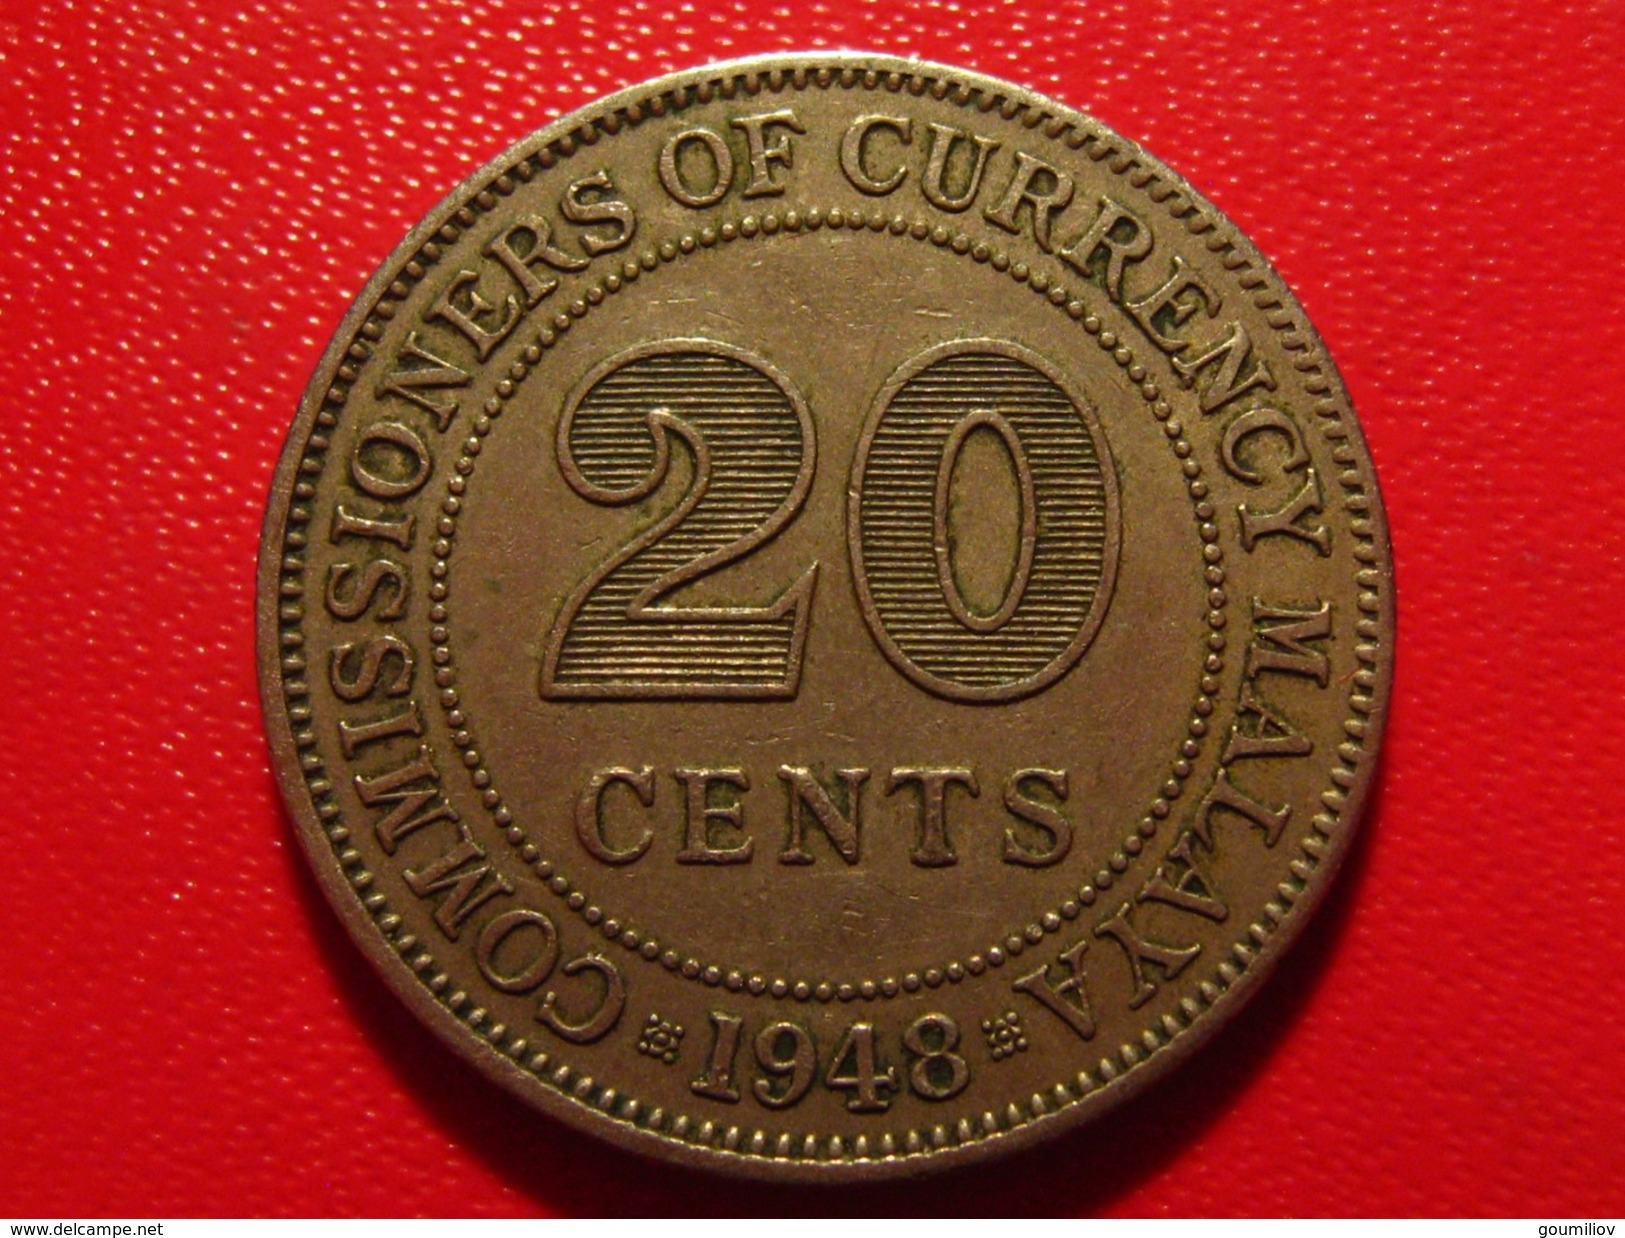 Malaya - 20 Cents 1948 George VI 4763 - Malaysia